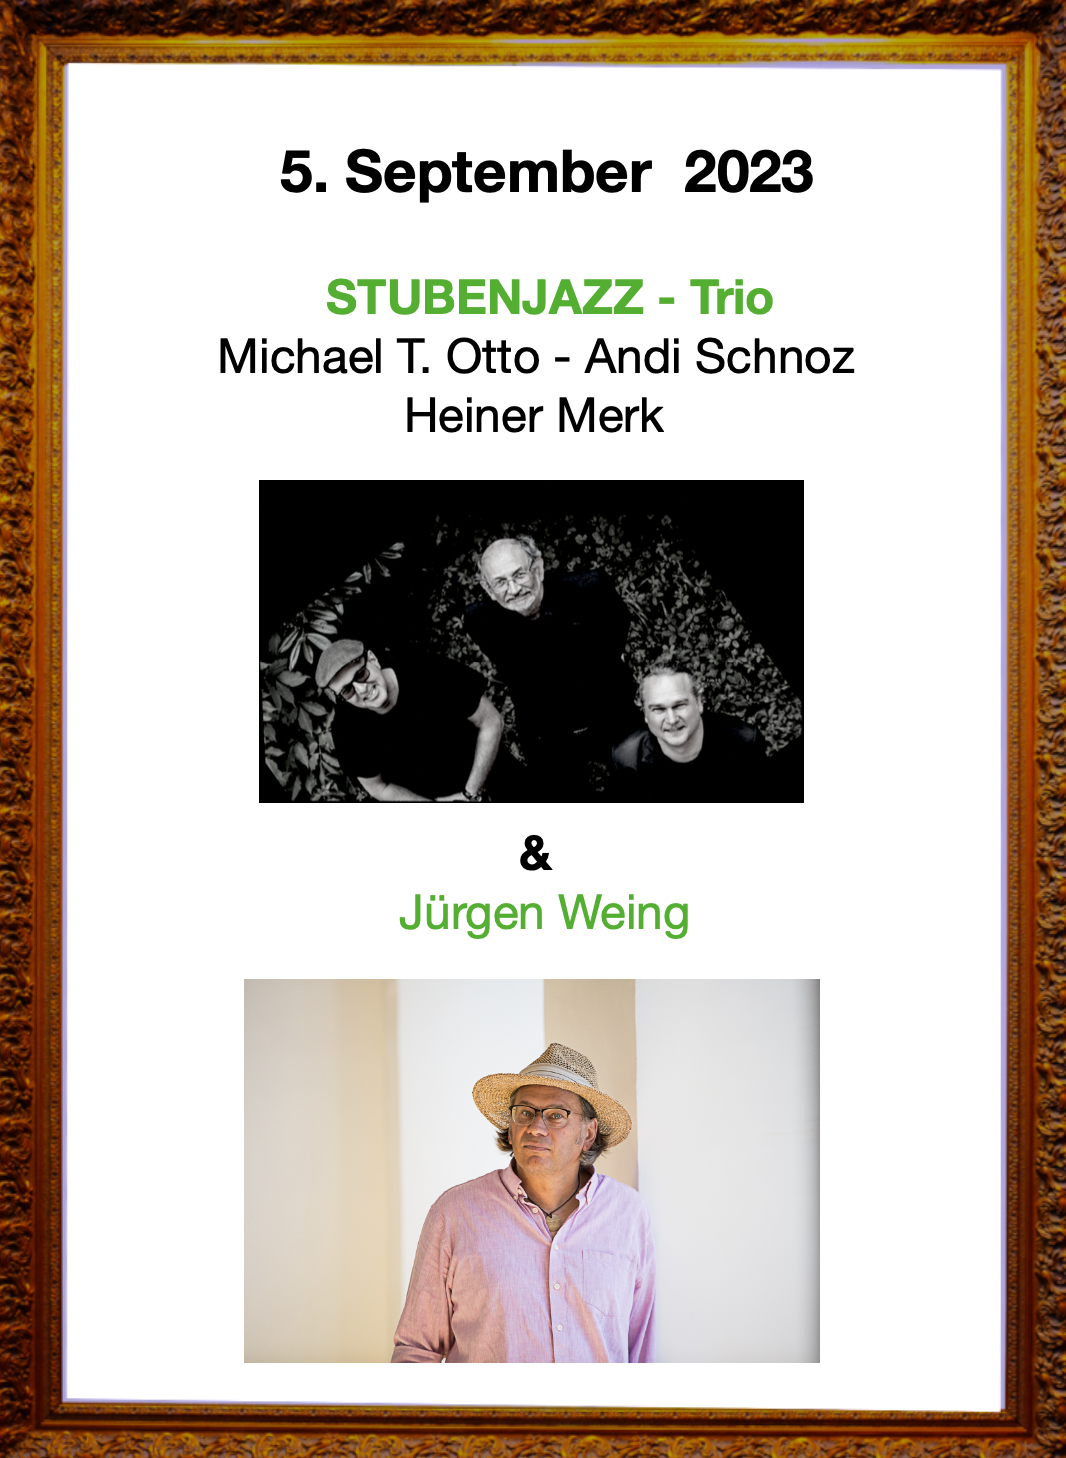 Veranstaltung 5. September - Stubenjazz-Trio